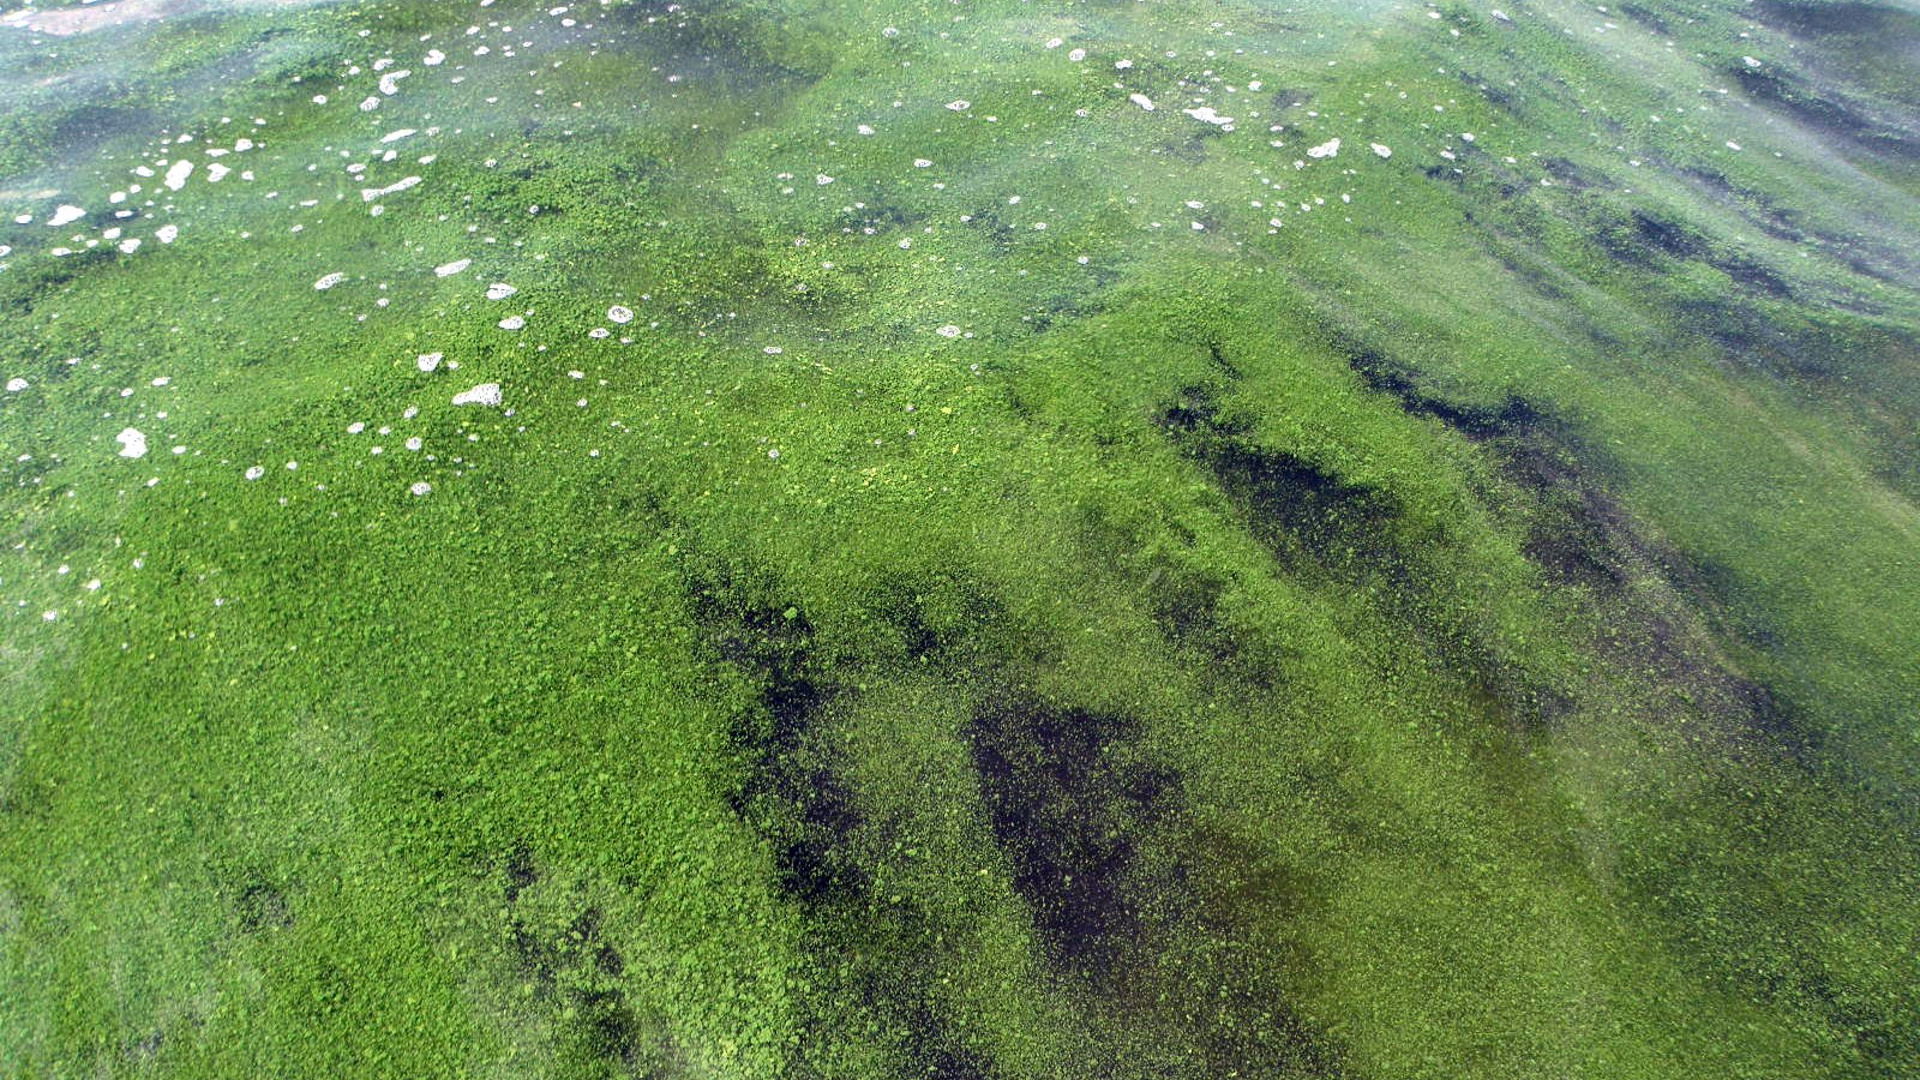 algae bloom